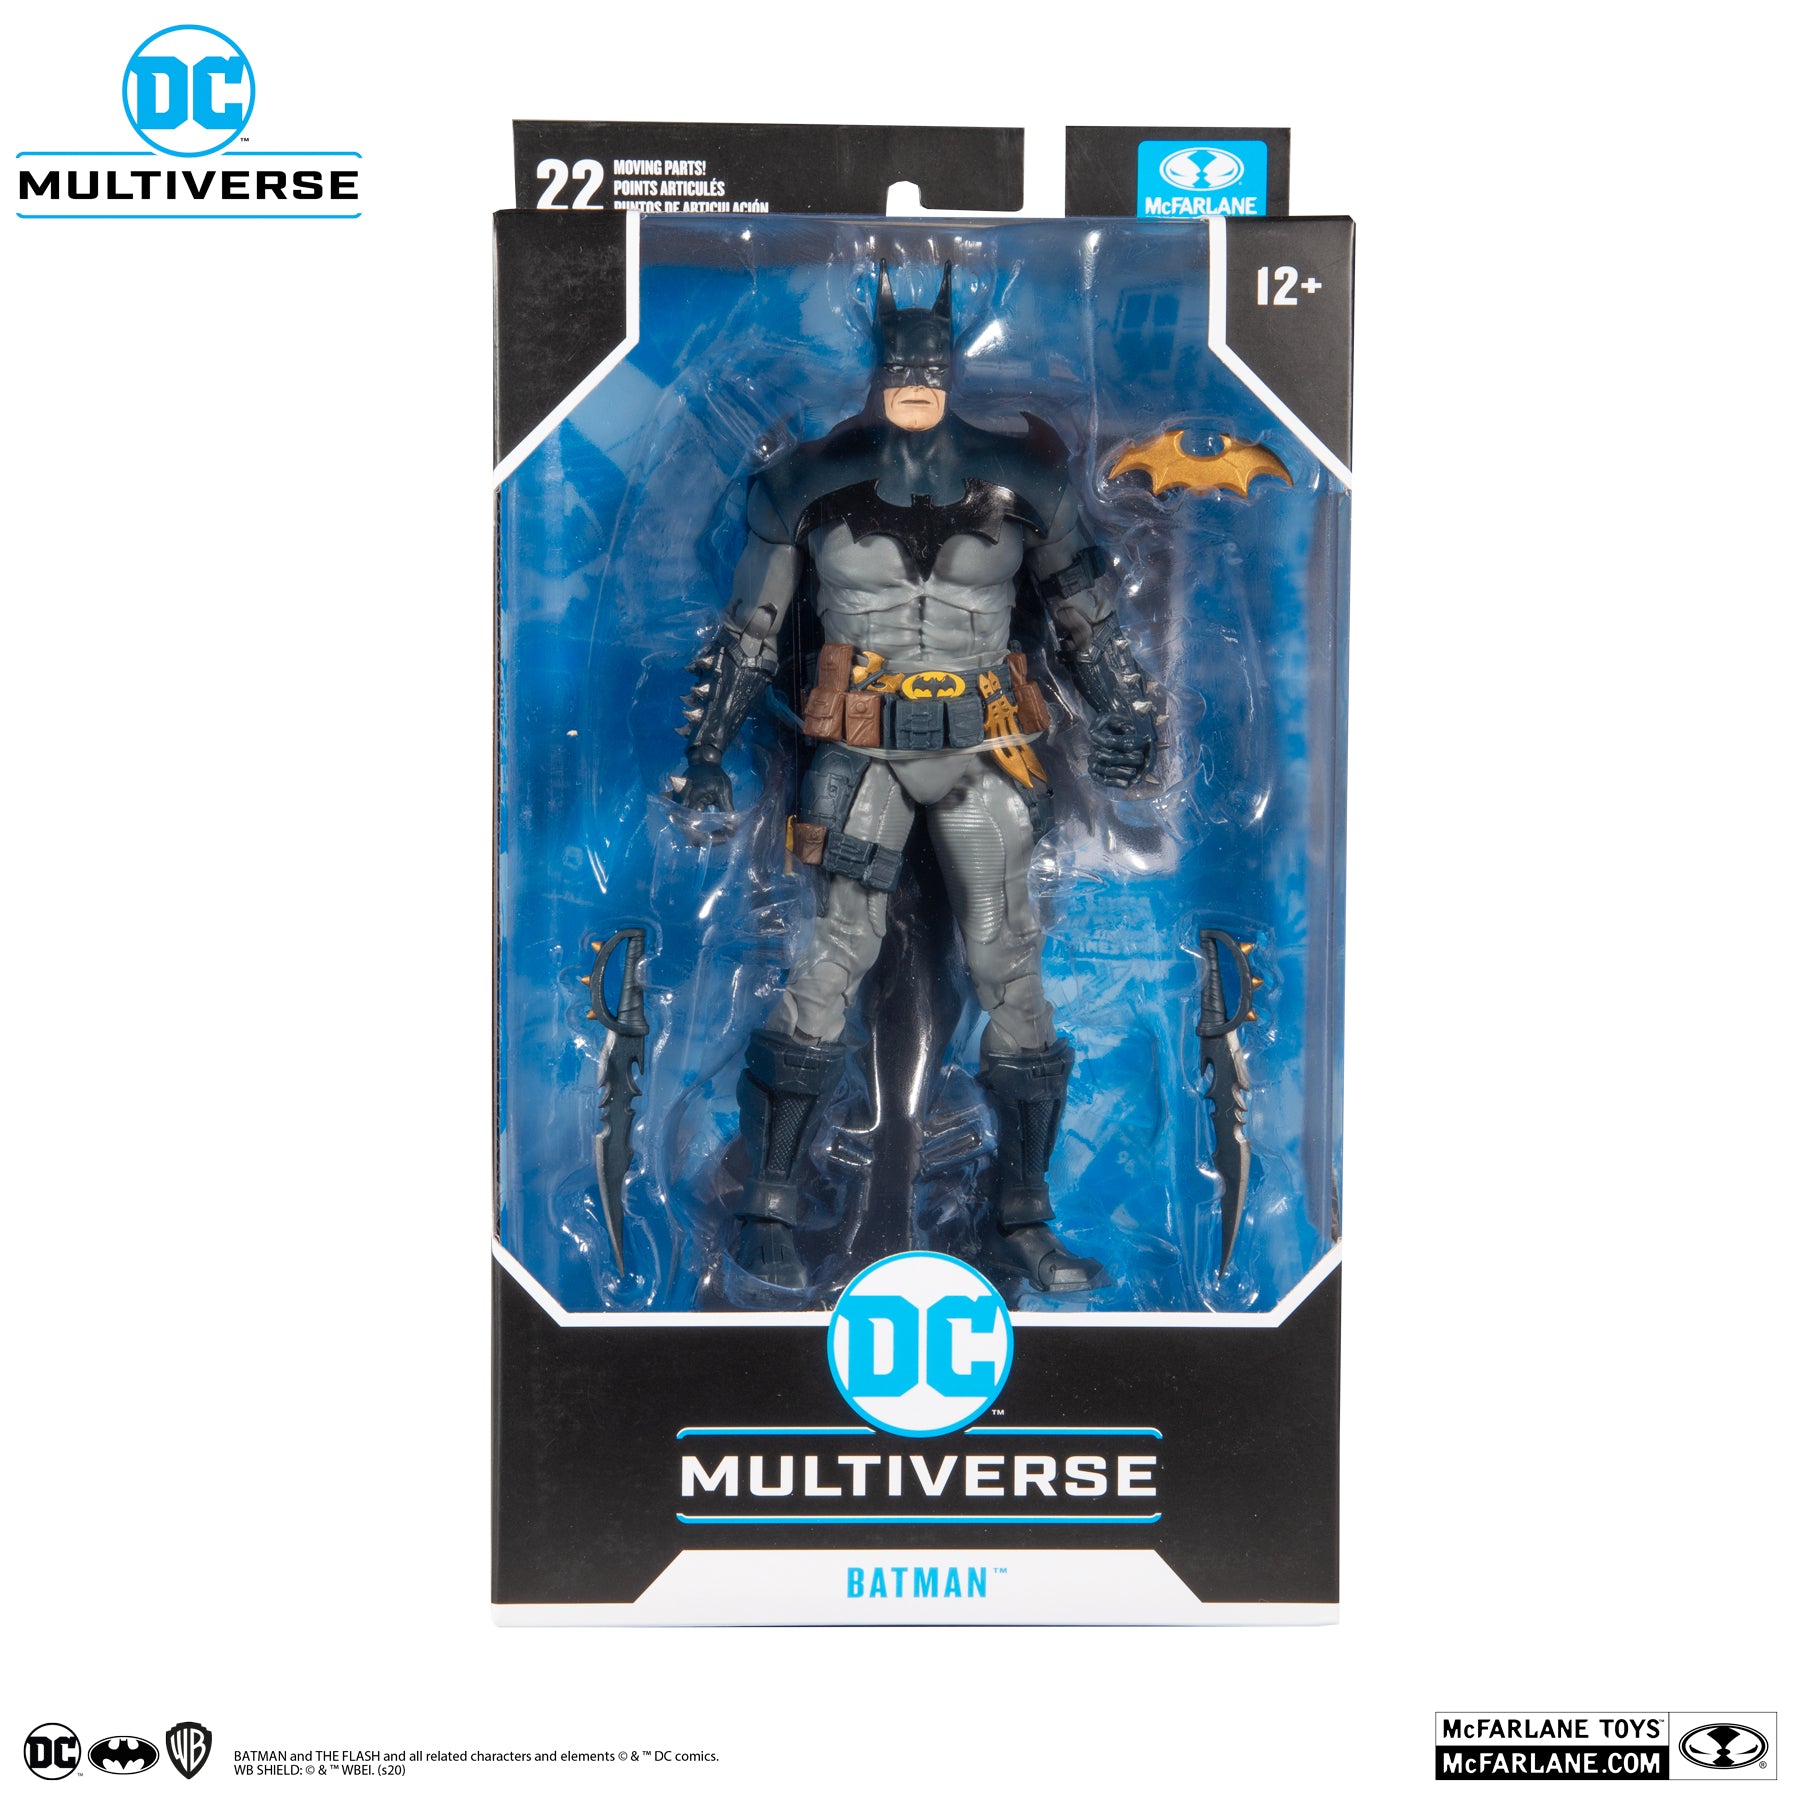 DC Multiverse Batman Designed by Todd McFarlane - McFarlane Toys-1